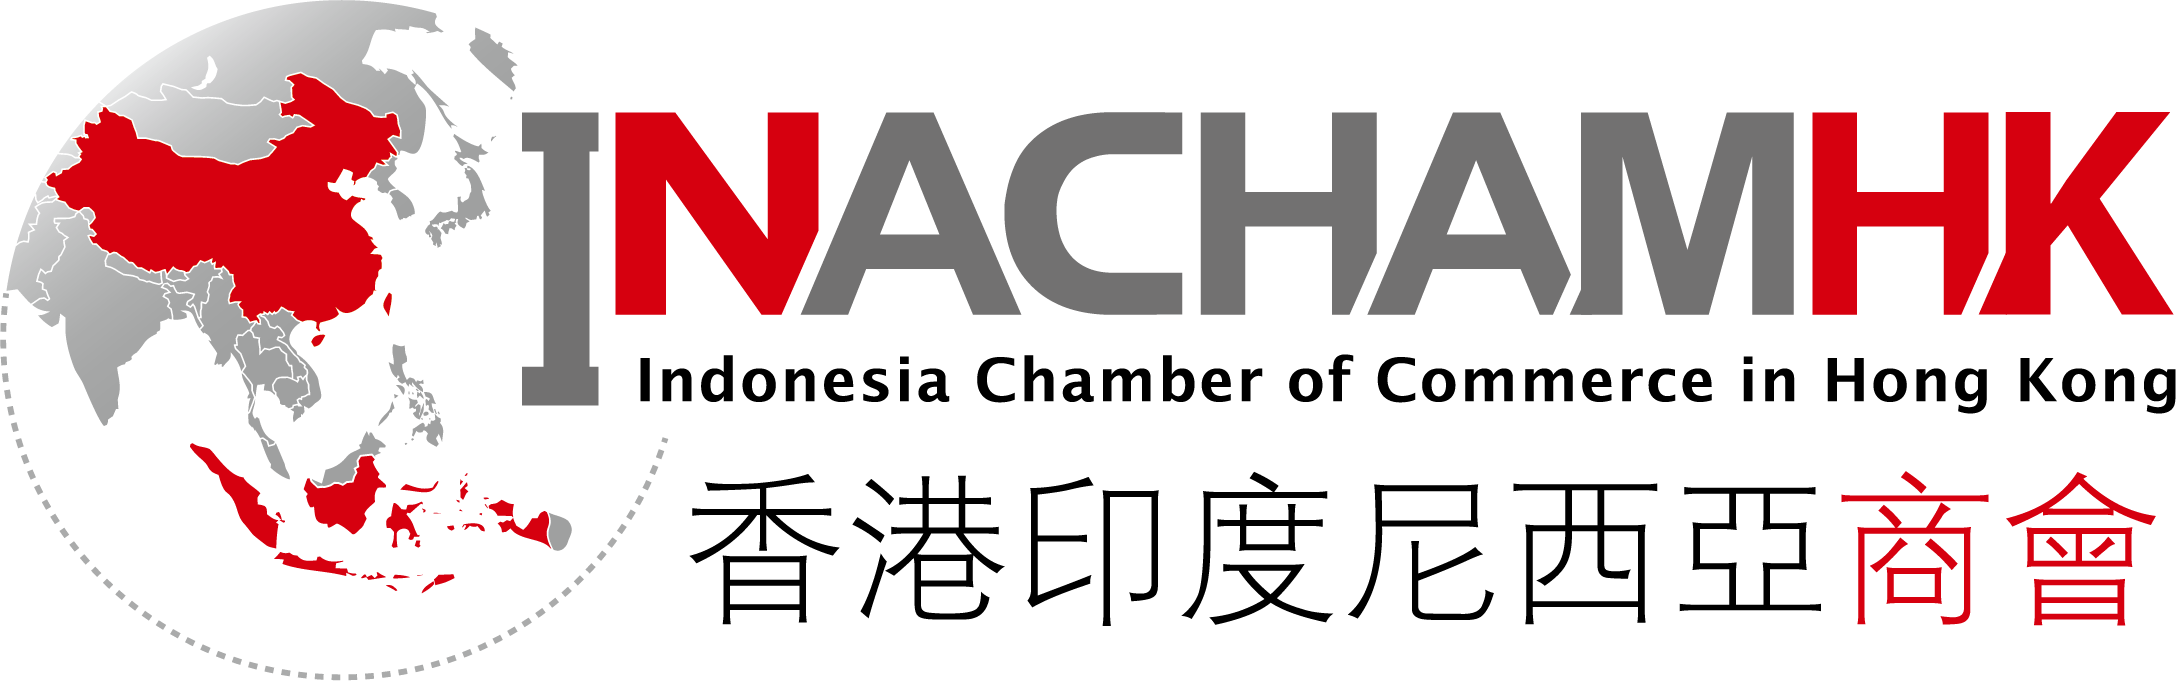 InachamHK Logo Png 130K.png